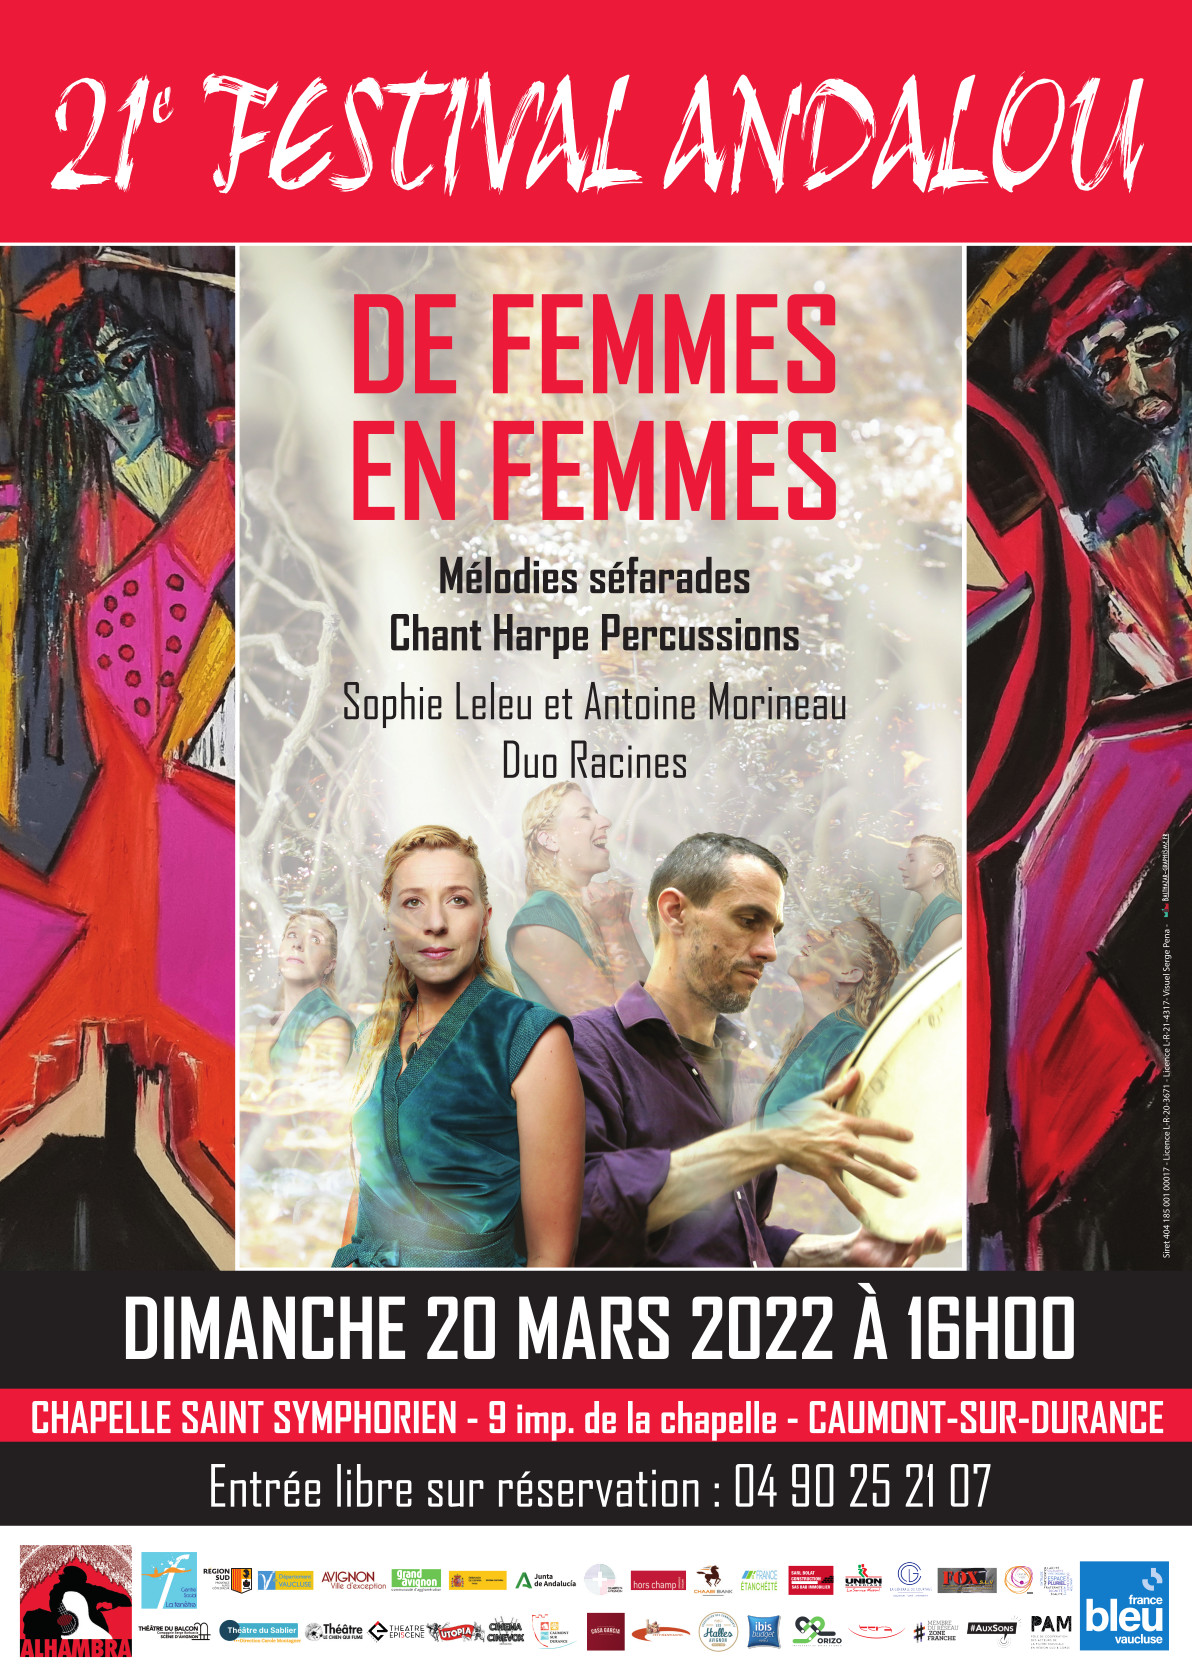 Affiche concert femmes en femmes A3 festival andalou 2022